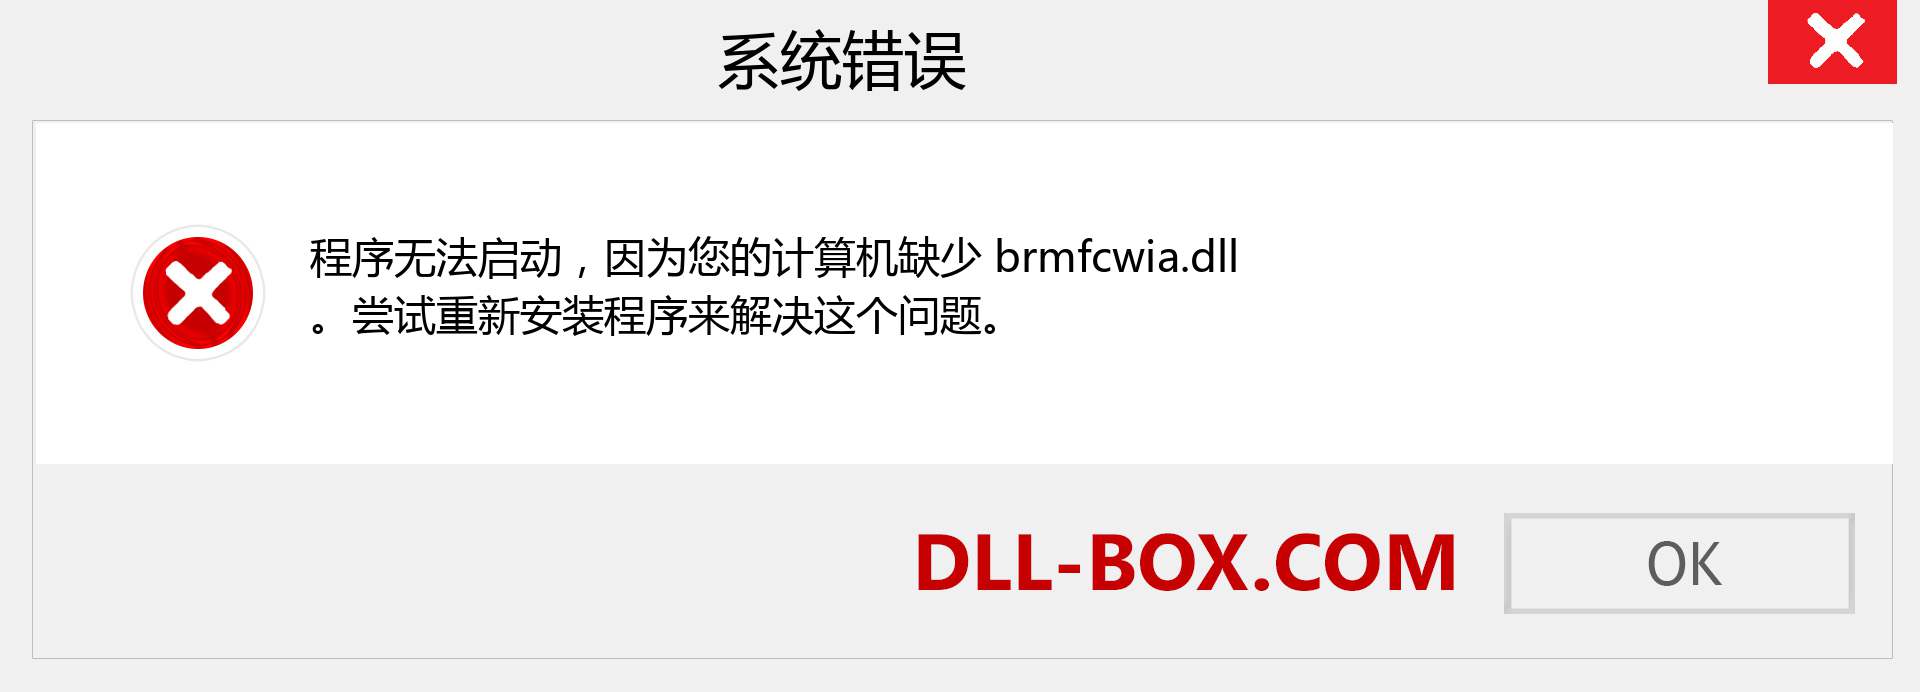 brmfcwia.dll 文件丢失？。 适用于 Windows 7、8、10 的下载 - 修复 Windows、照片、图像上的 brmfcwia dll 丢失错误